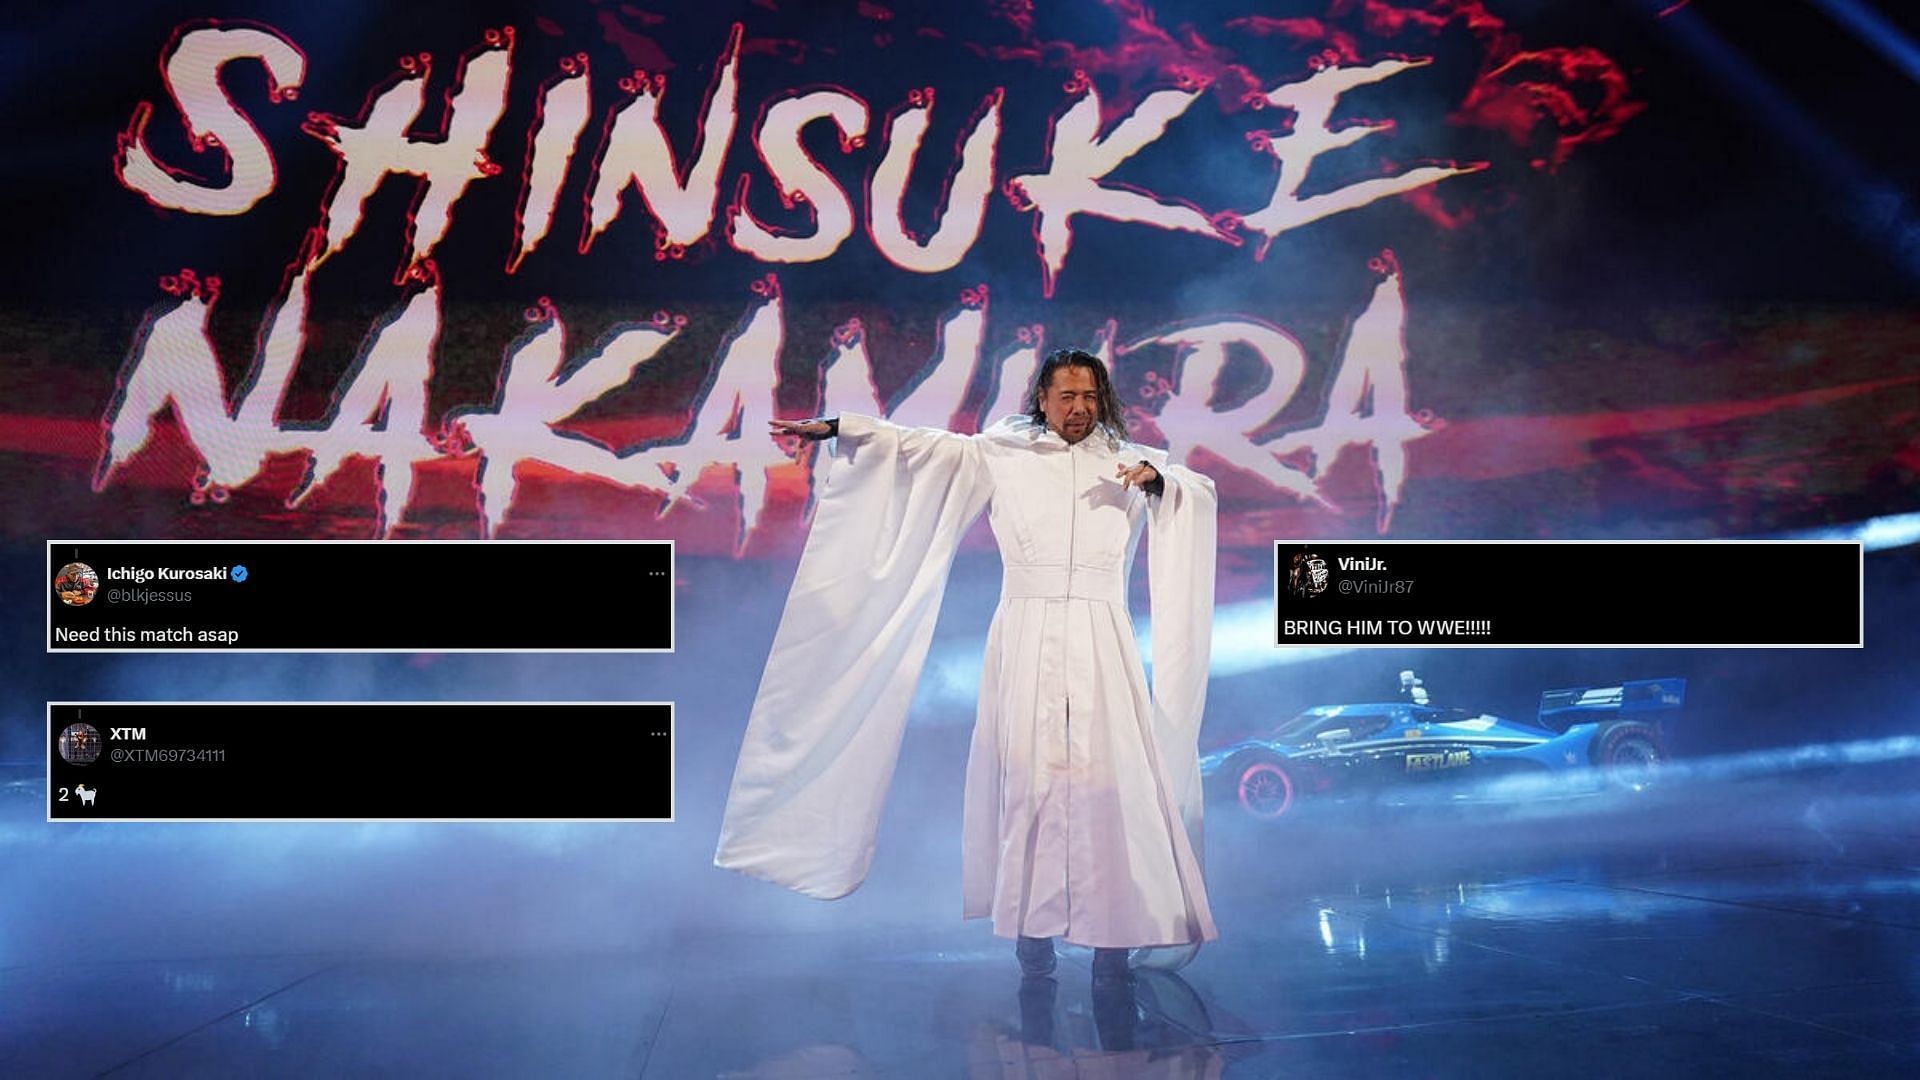 Shinsuke Nakamura is a former Intercontinental Champion [Photo courtesy of WWE